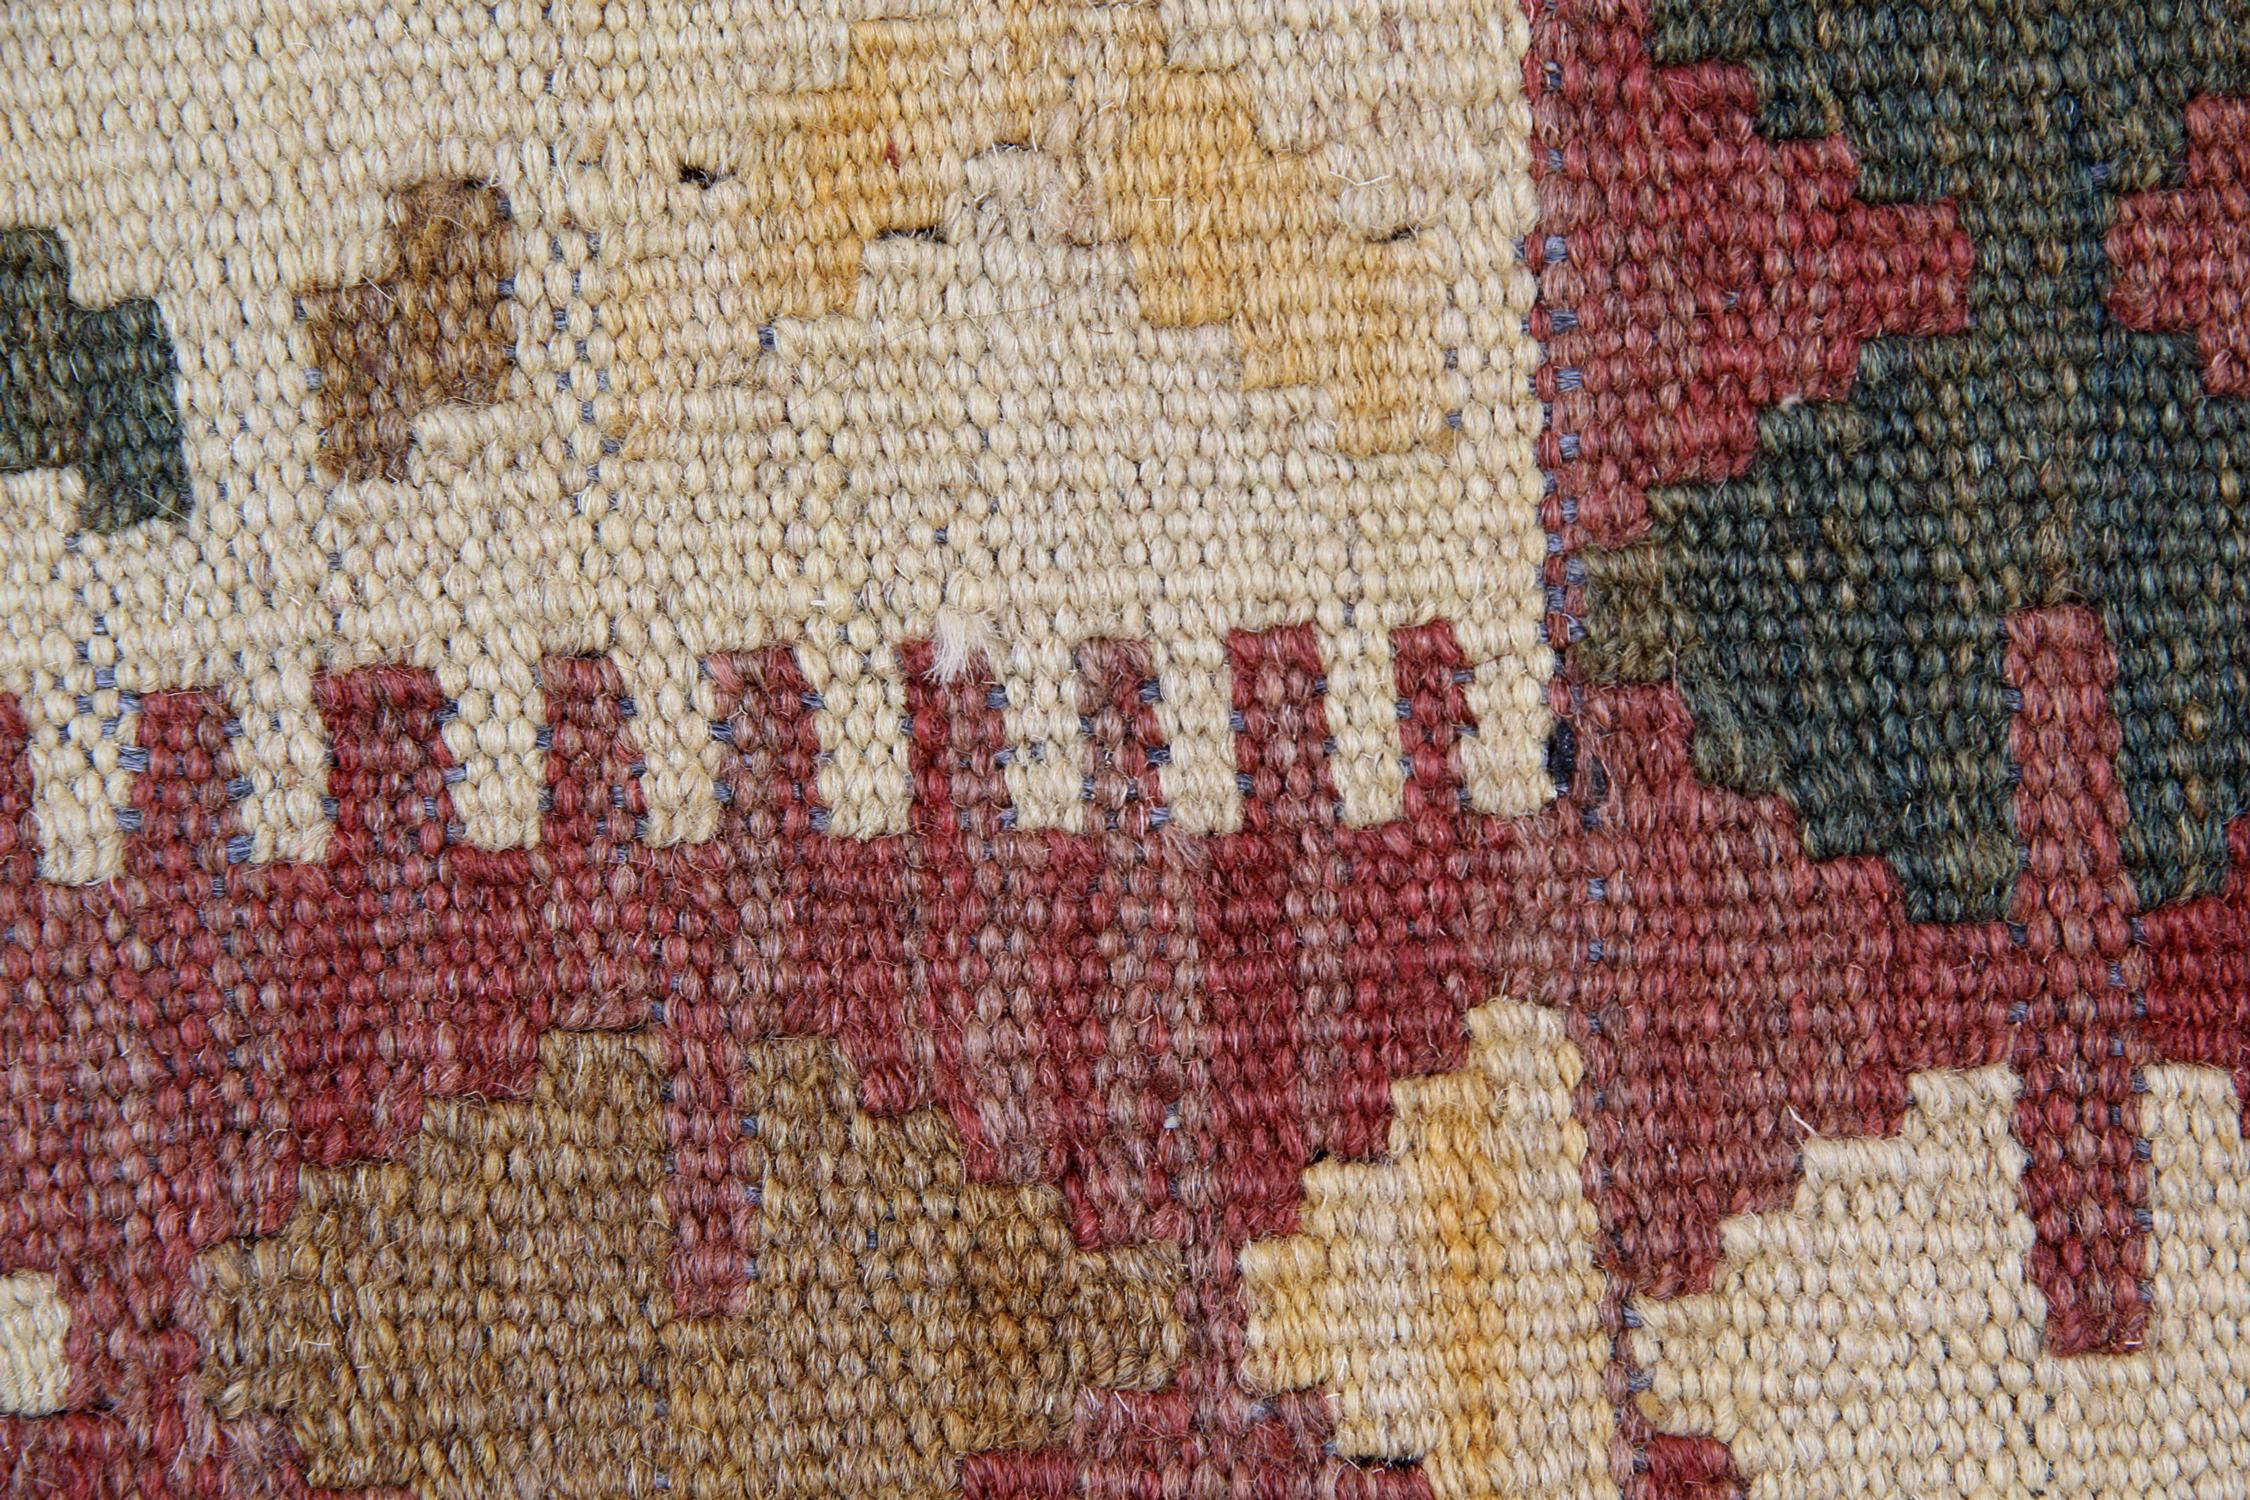 Woven Traditional Kilims Geometric Handmade Carpet Vintage Kilim Rug For Sale